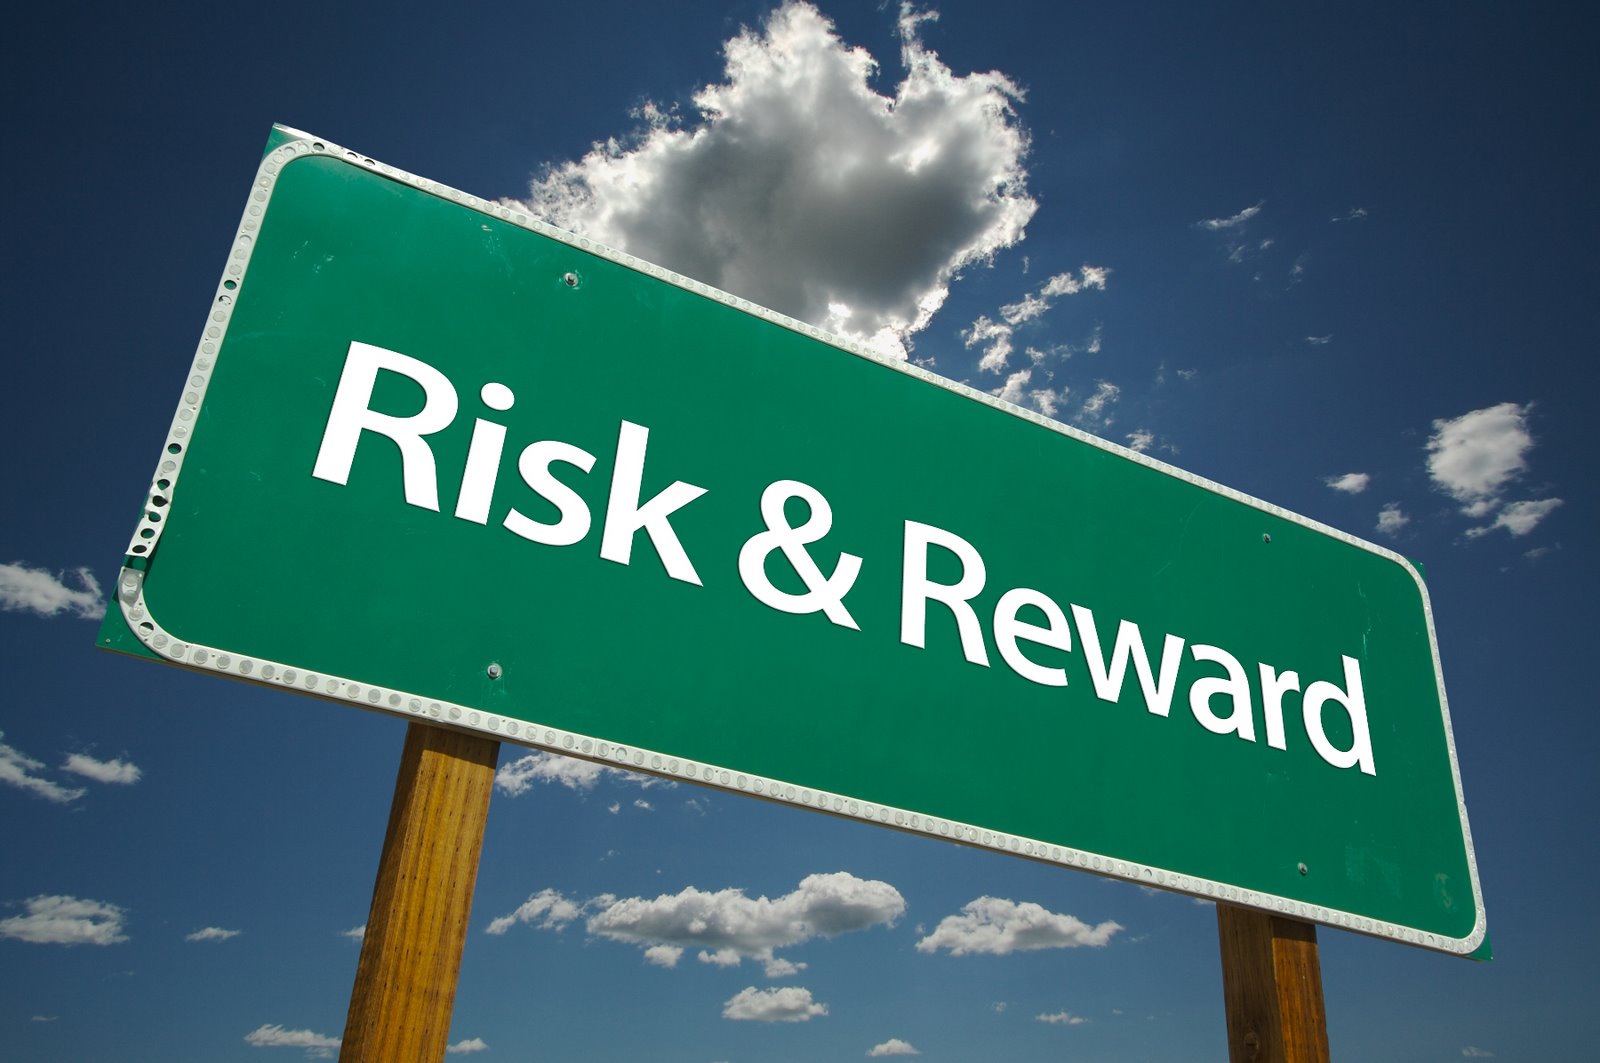 http://www.jkpod.com/wp-content/uploads/2013/06/risk-and-reward.jpg